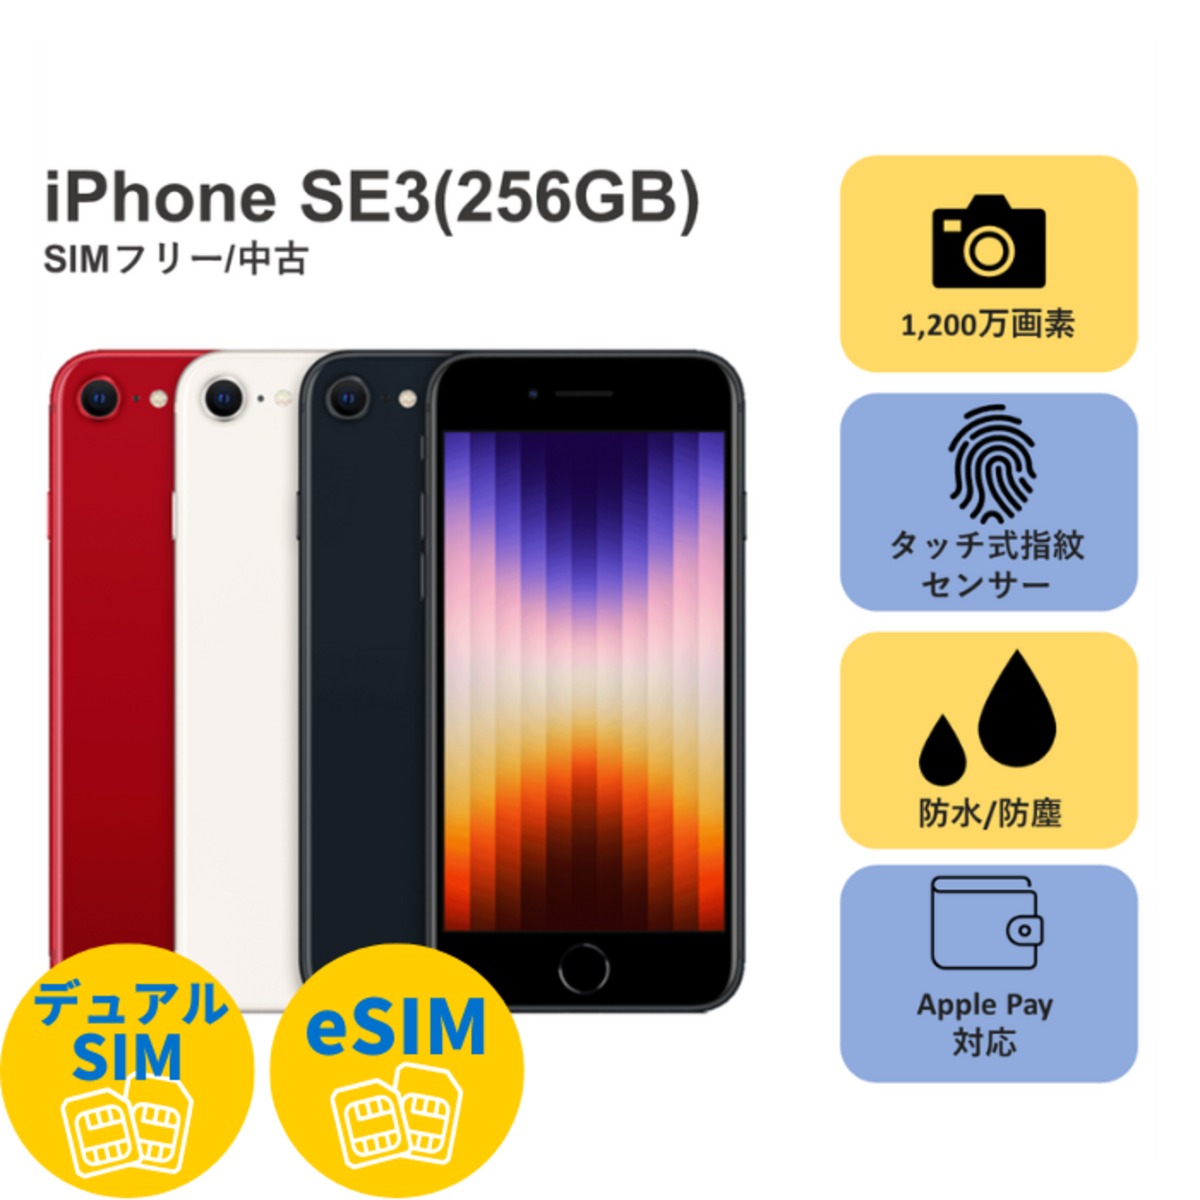 iPhoneSE3 256GB /中古Sランク】 | H.I.S. Mobile株式会社